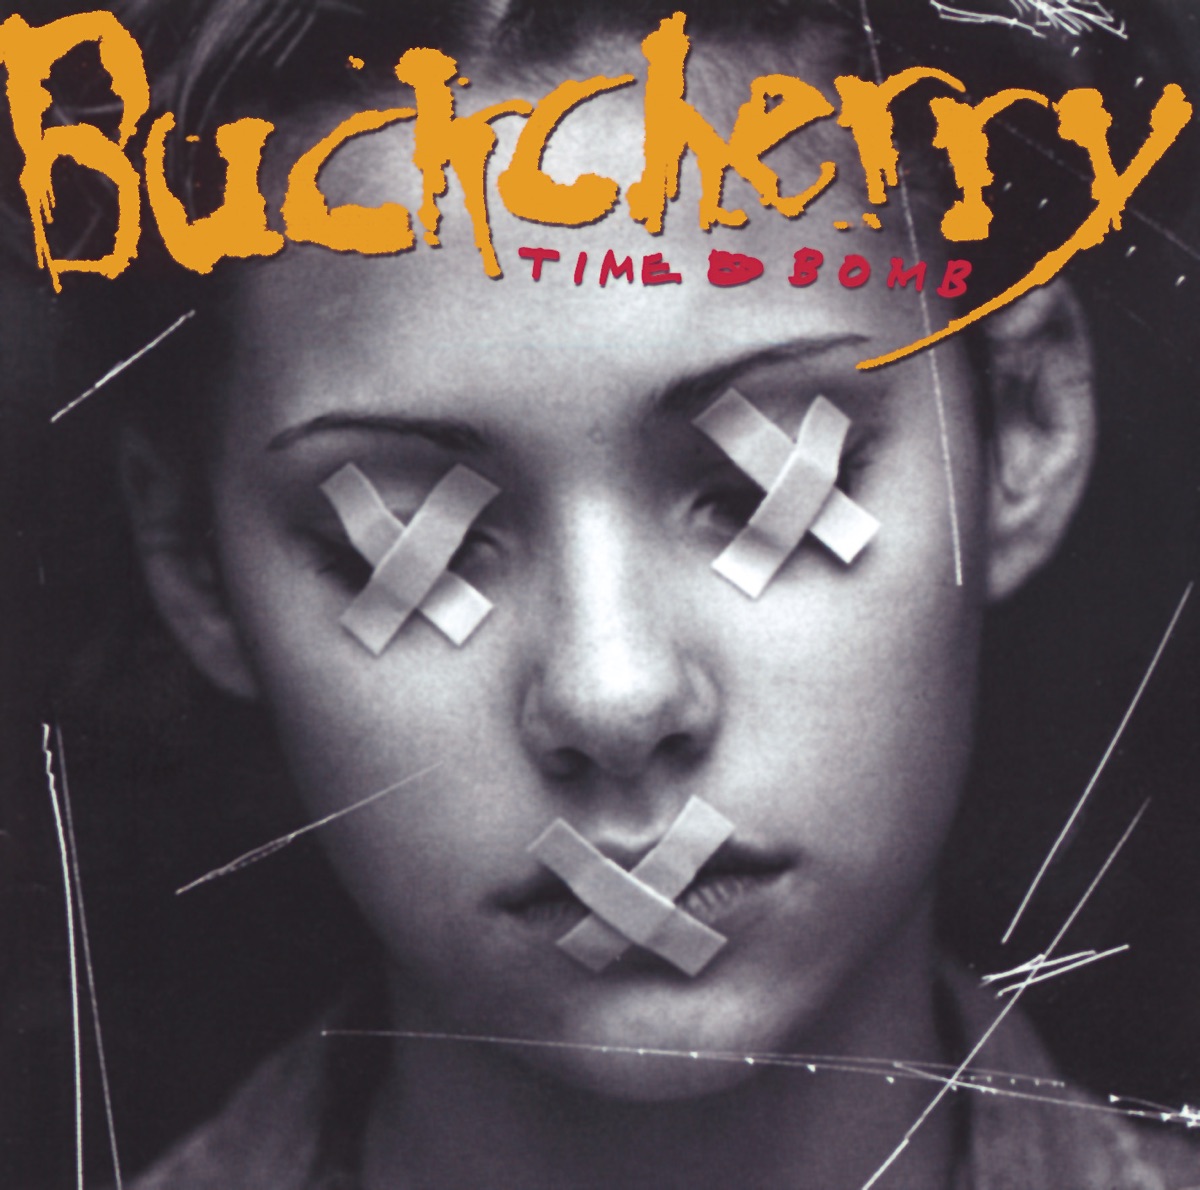 Vol. 10 - Album by Buckcherry - Apple Music